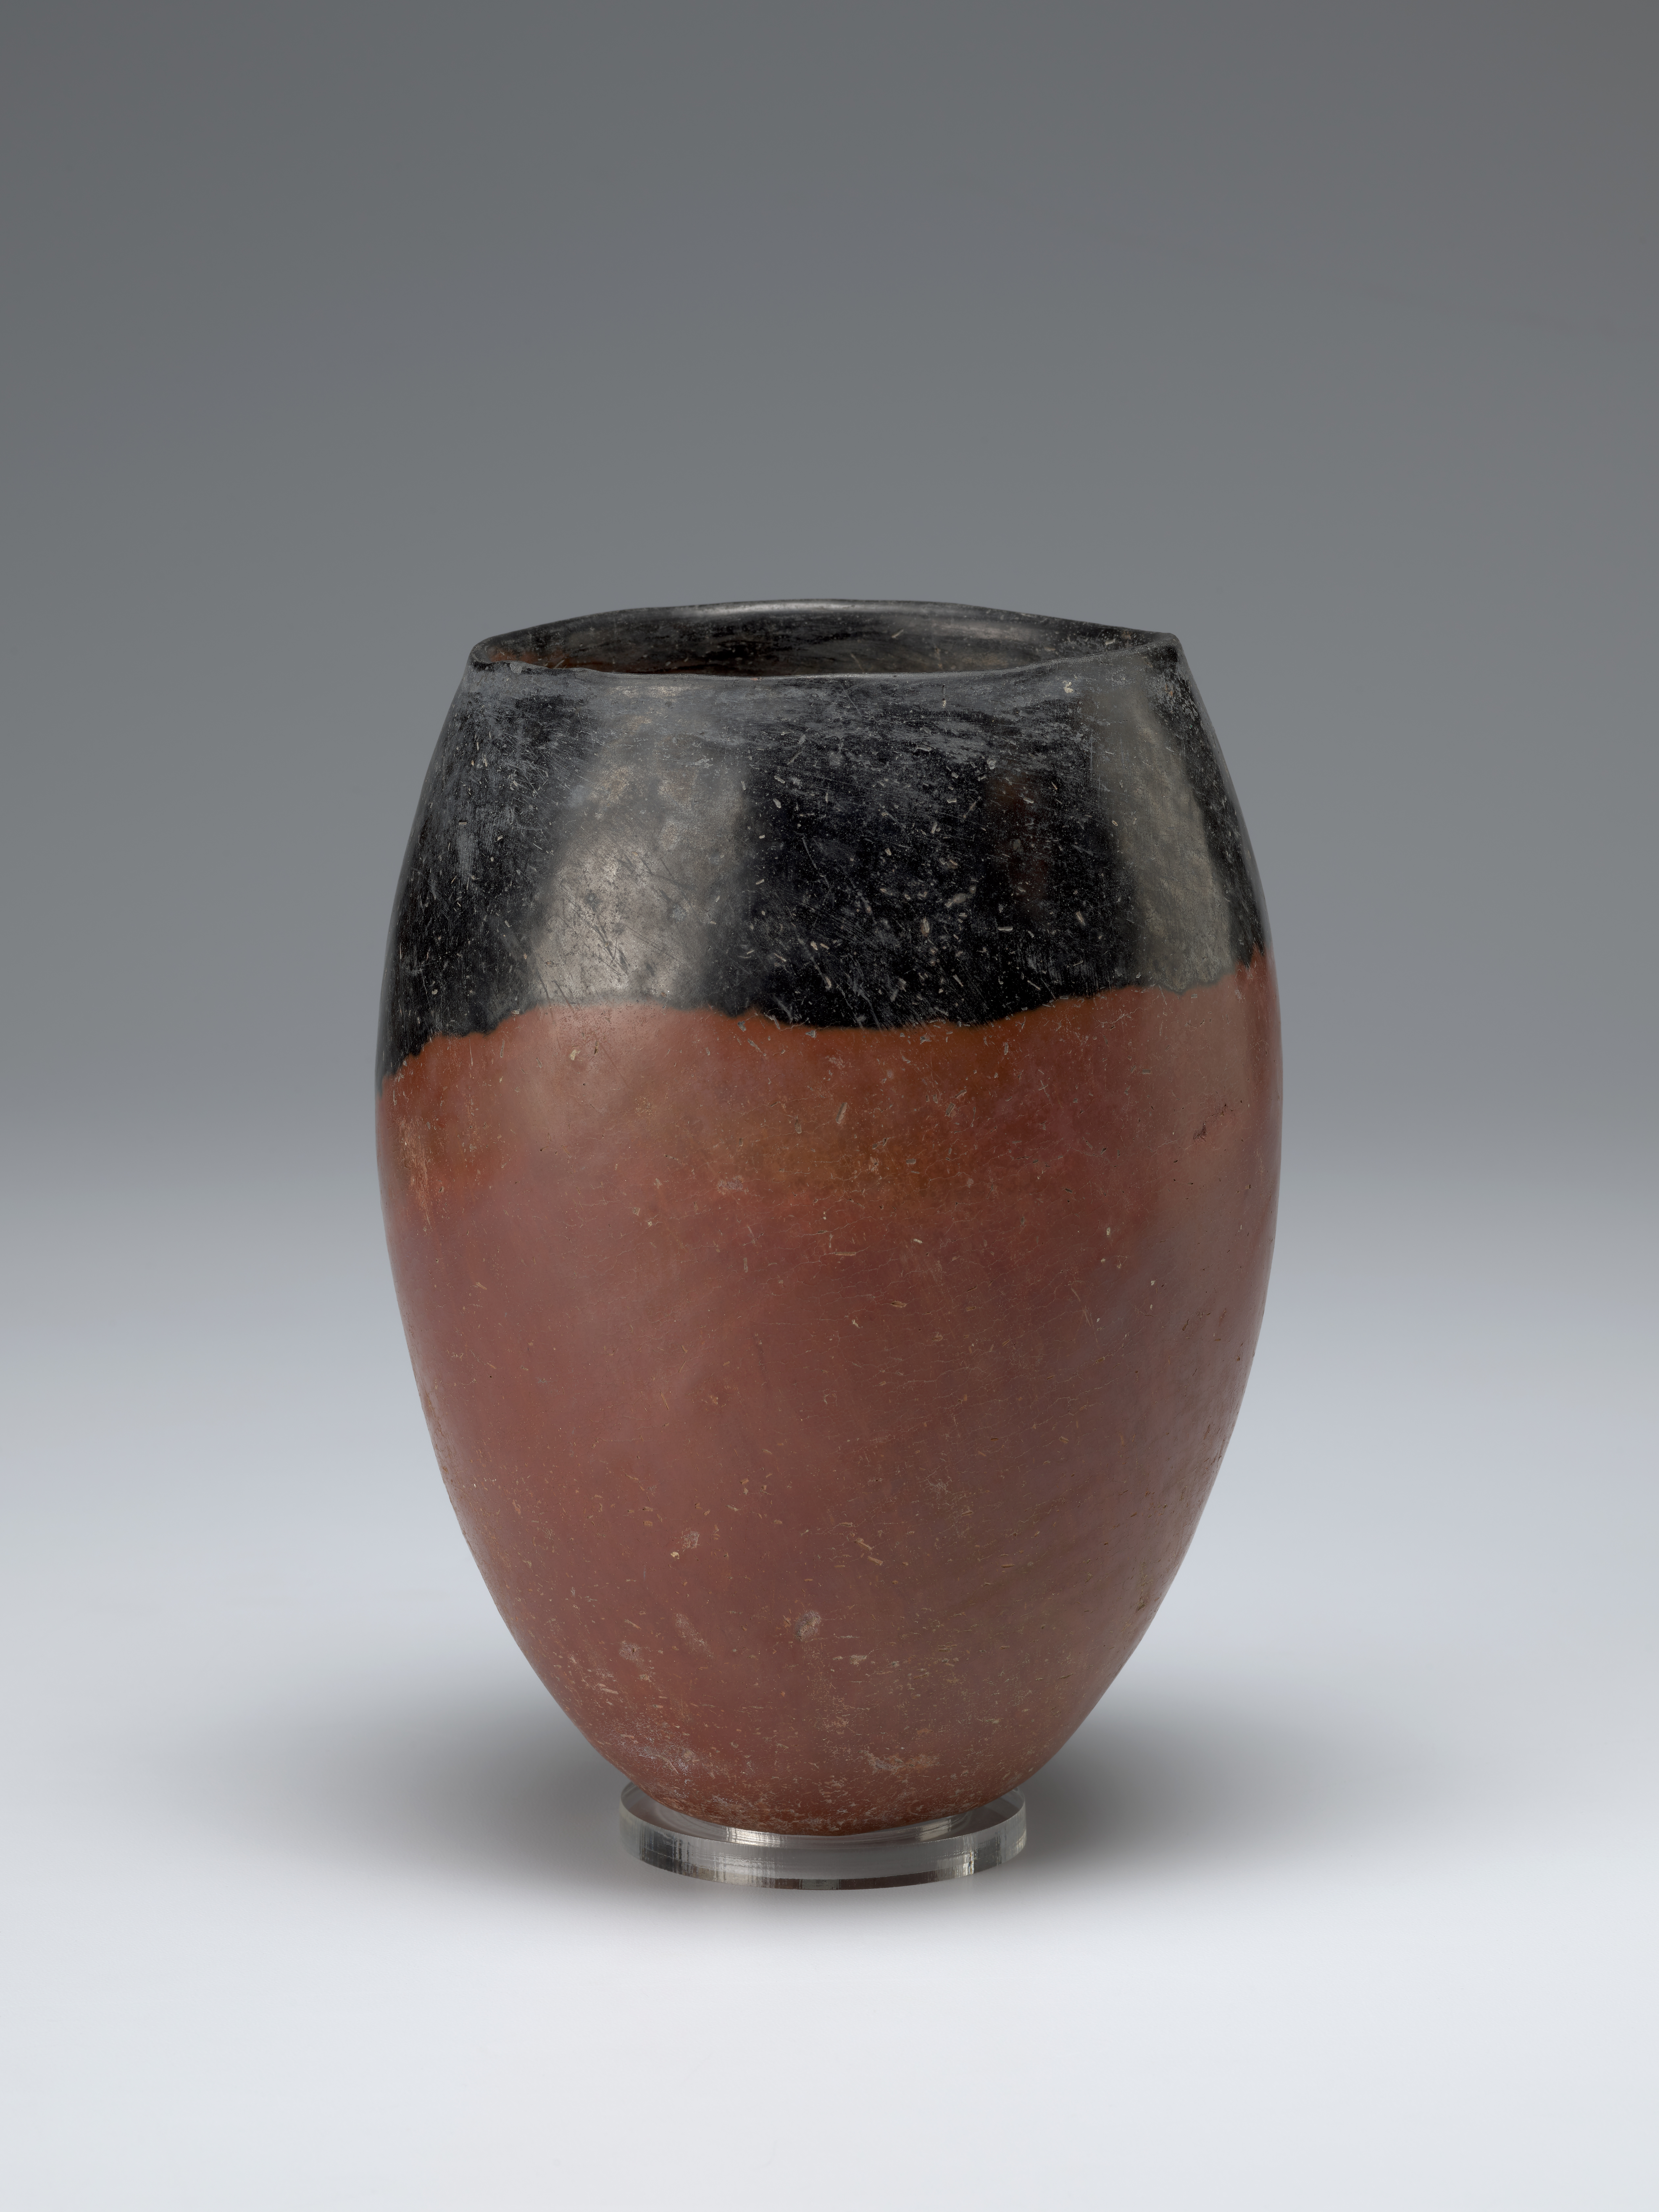 A red and black ceramic jar.